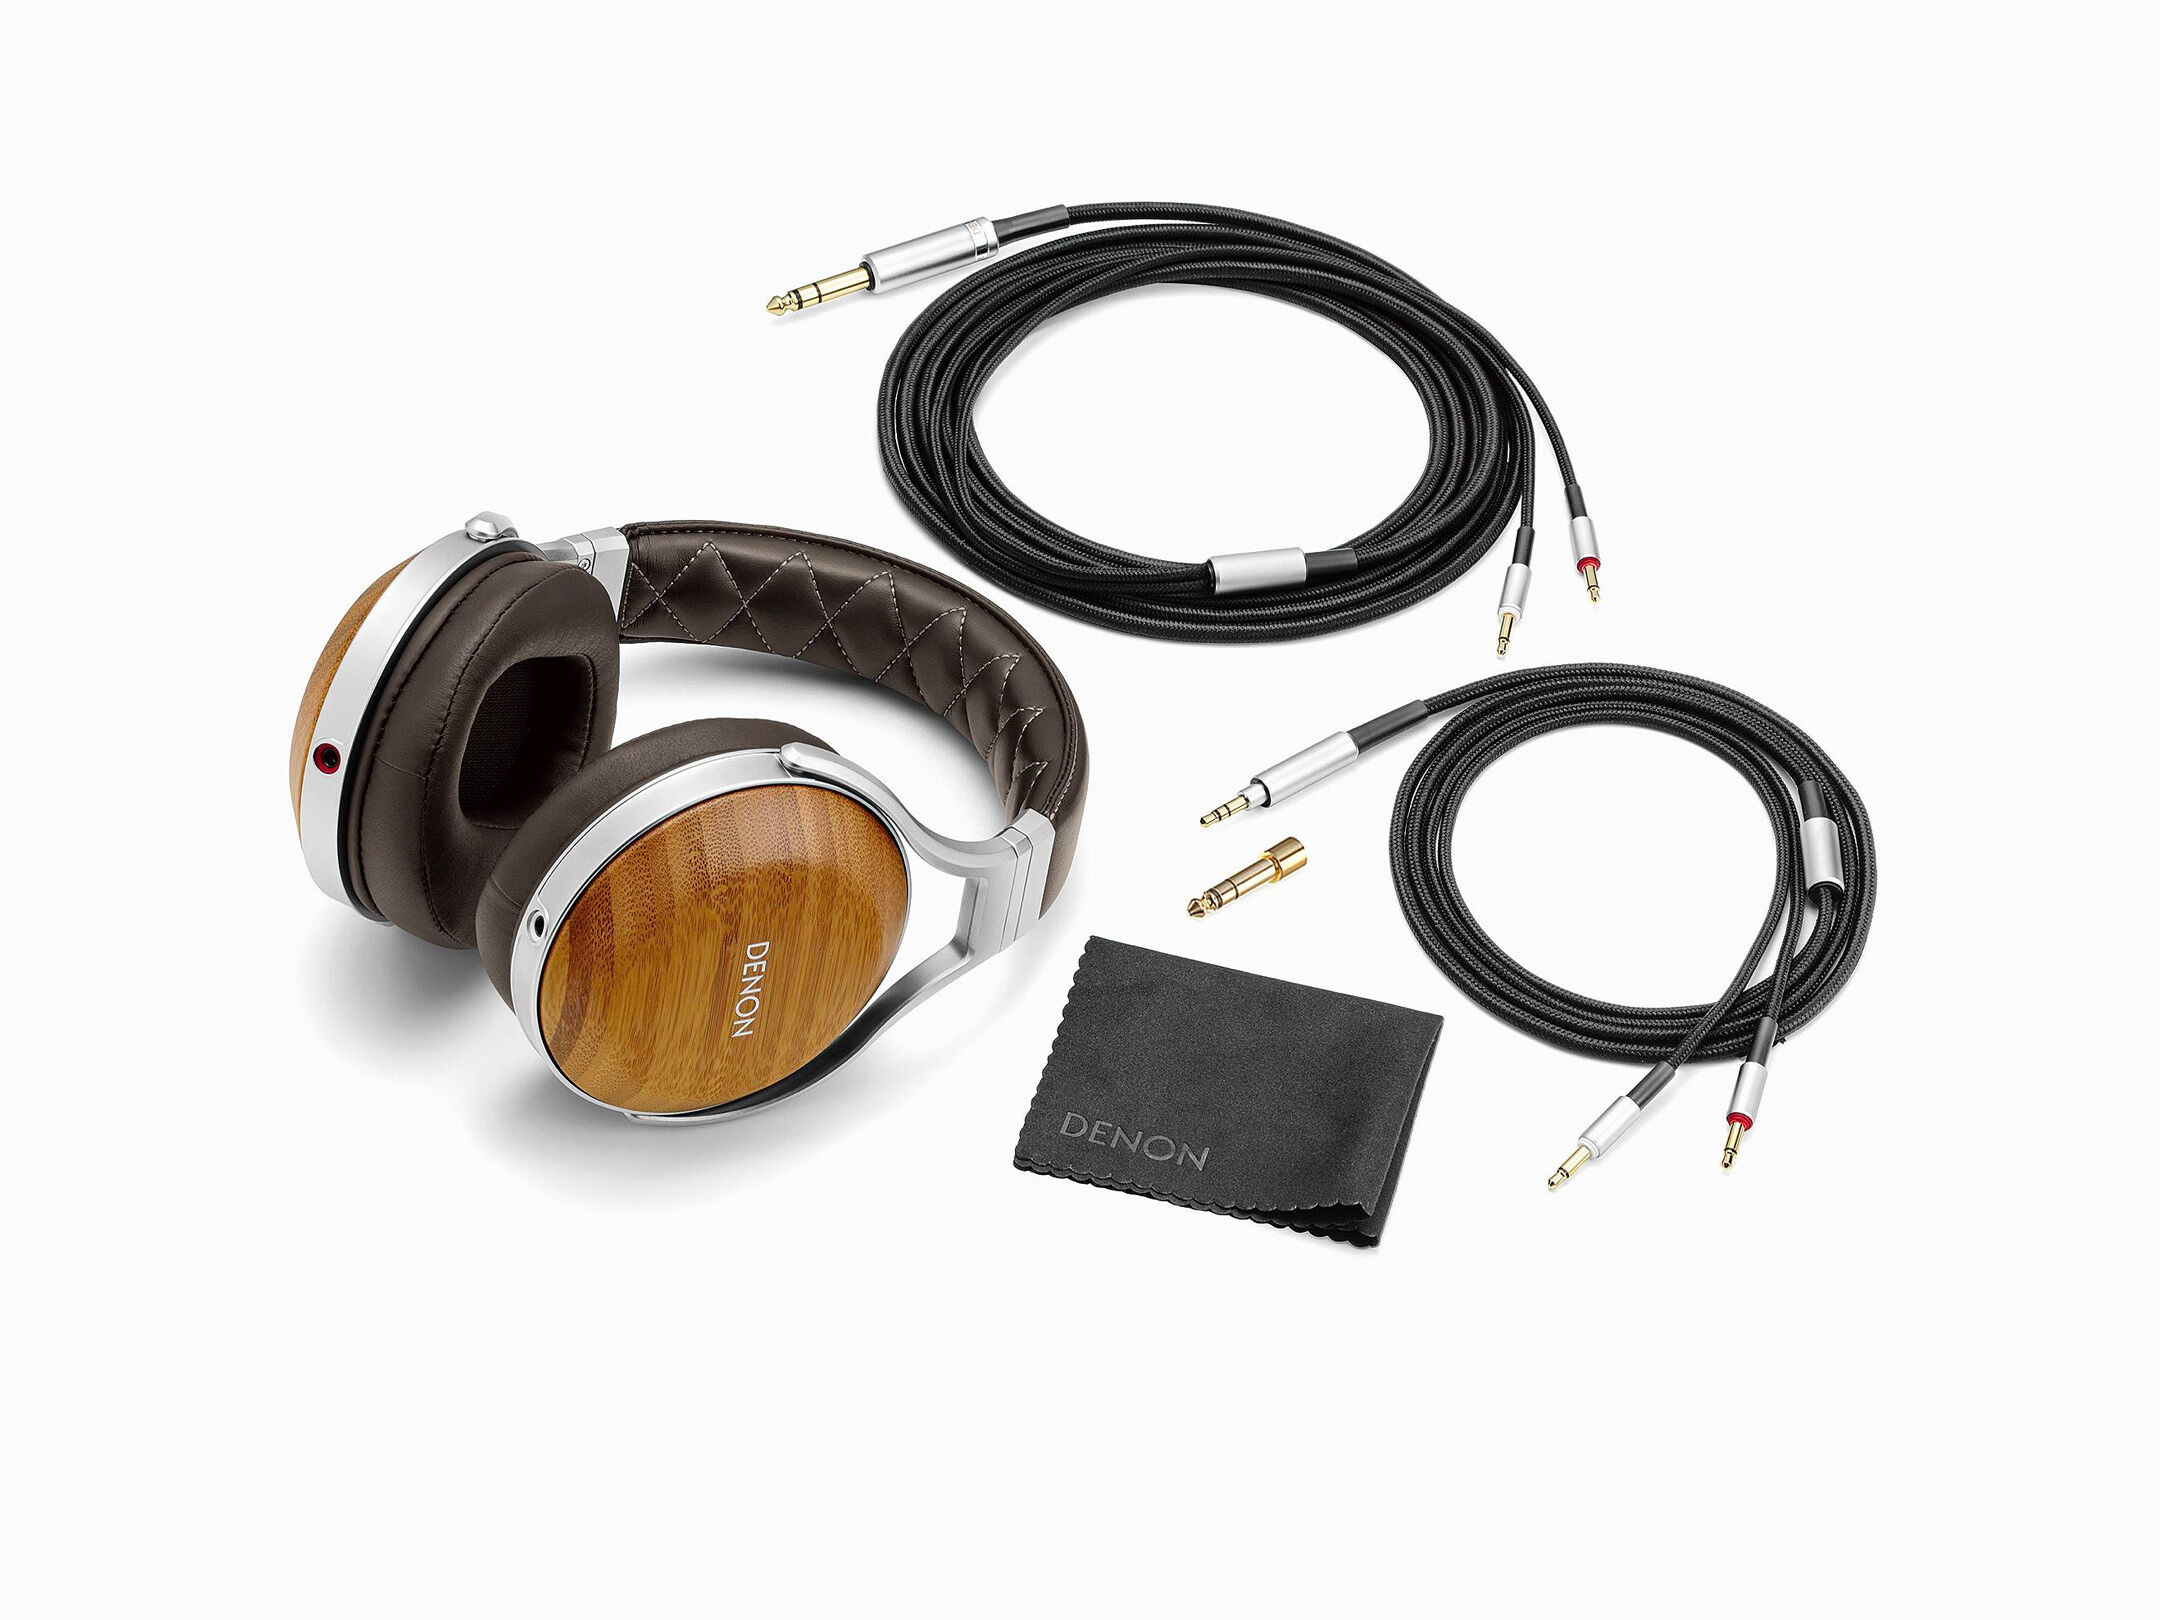 AH-D9200 - Flagship Hi-Fi Headphones fully made in Japan | Denon - US